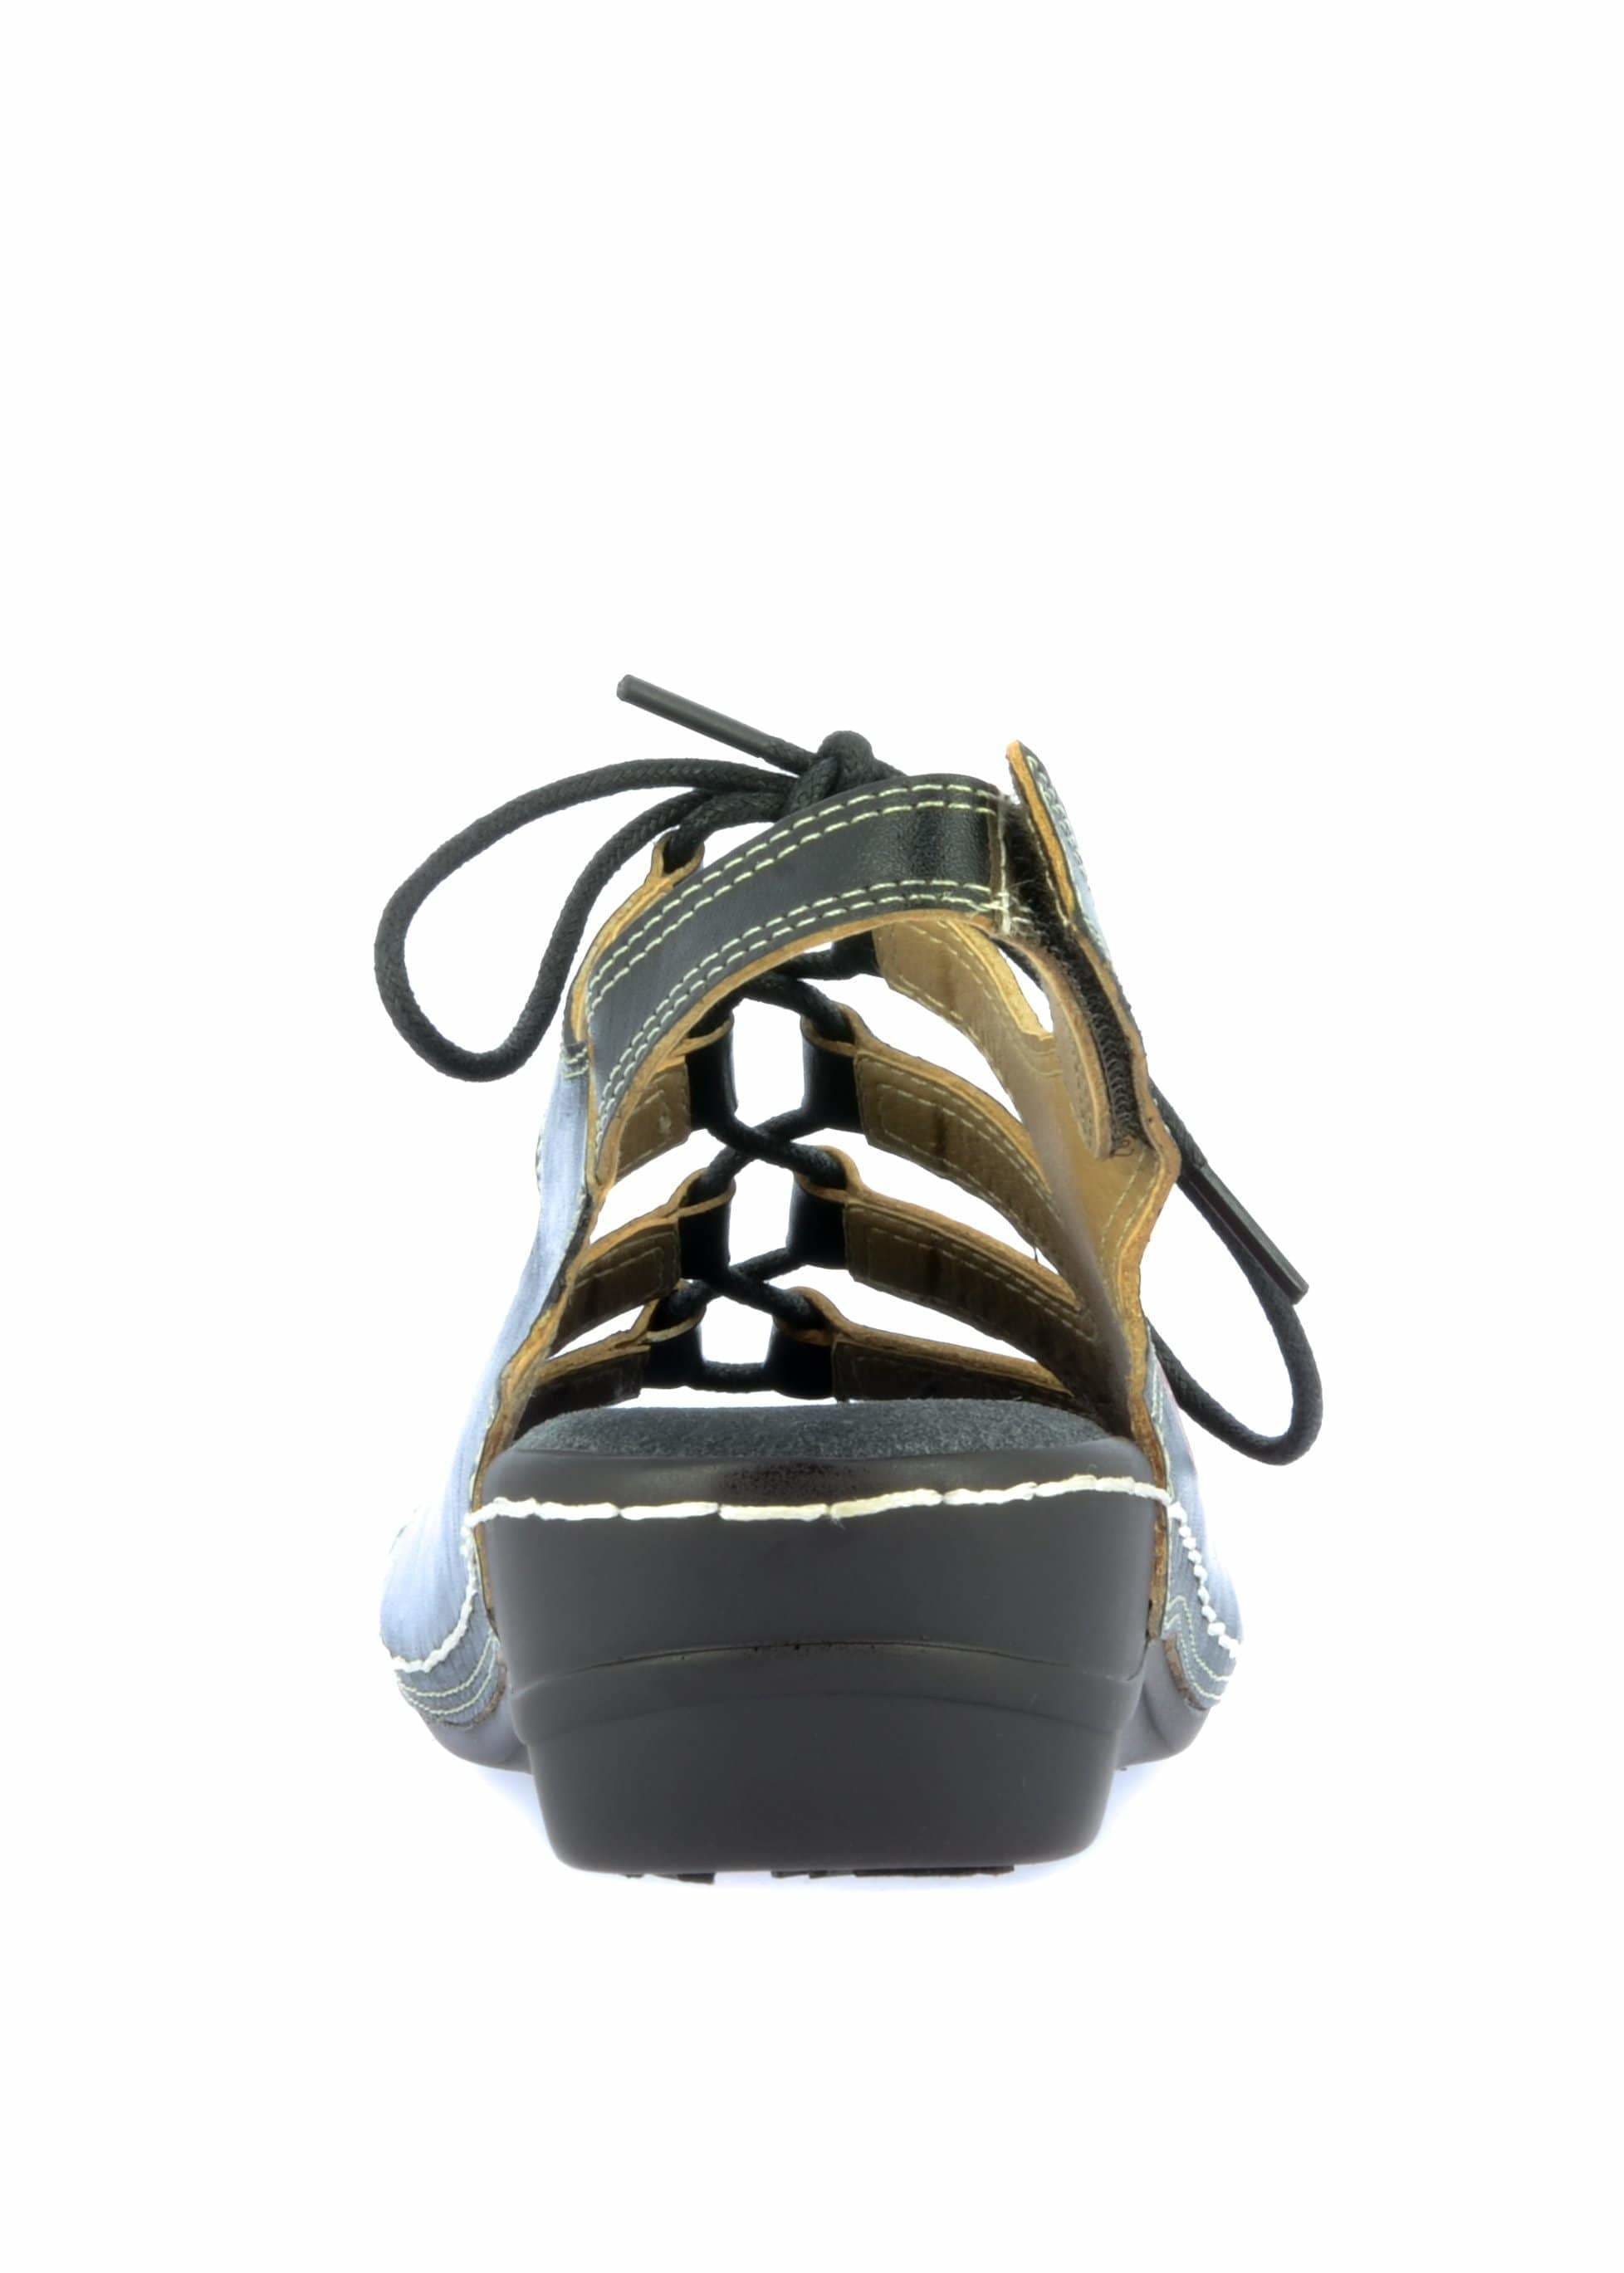 Shoe BICSCUITO11 - Sandal